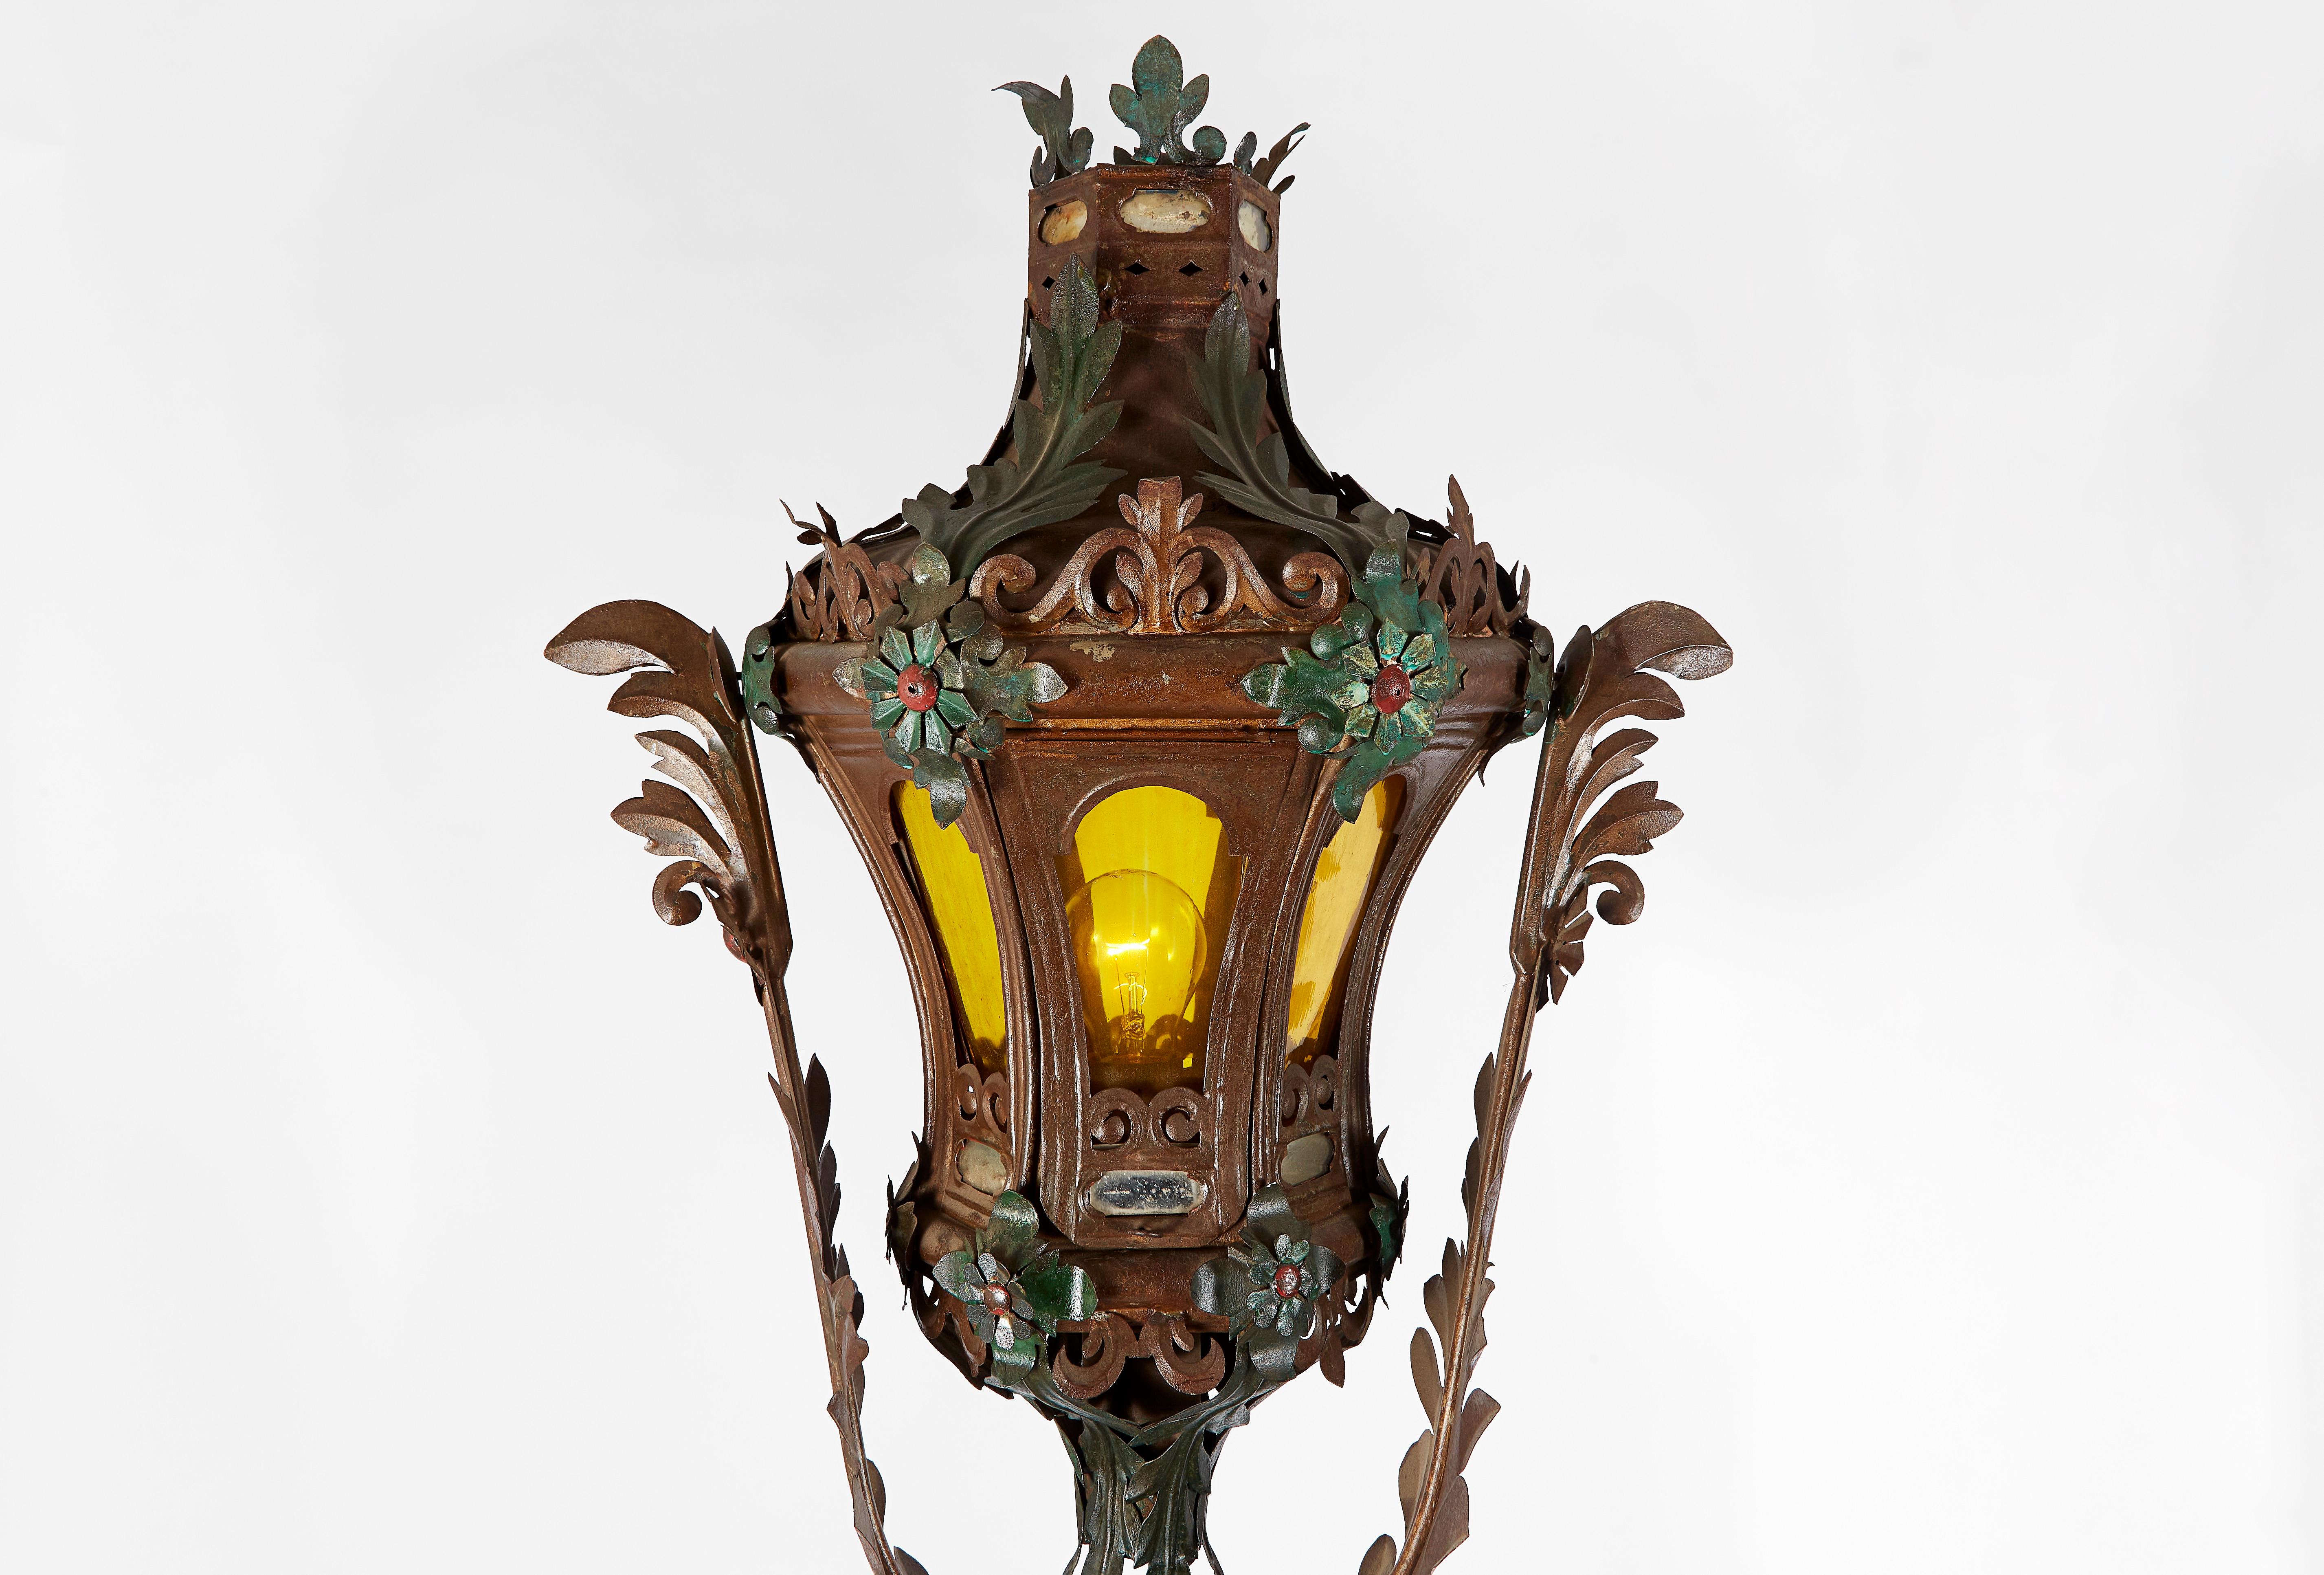 European Pair of Venetian Lanterns 19th Century Italian Gondola Lamps Baroque Style For Sale